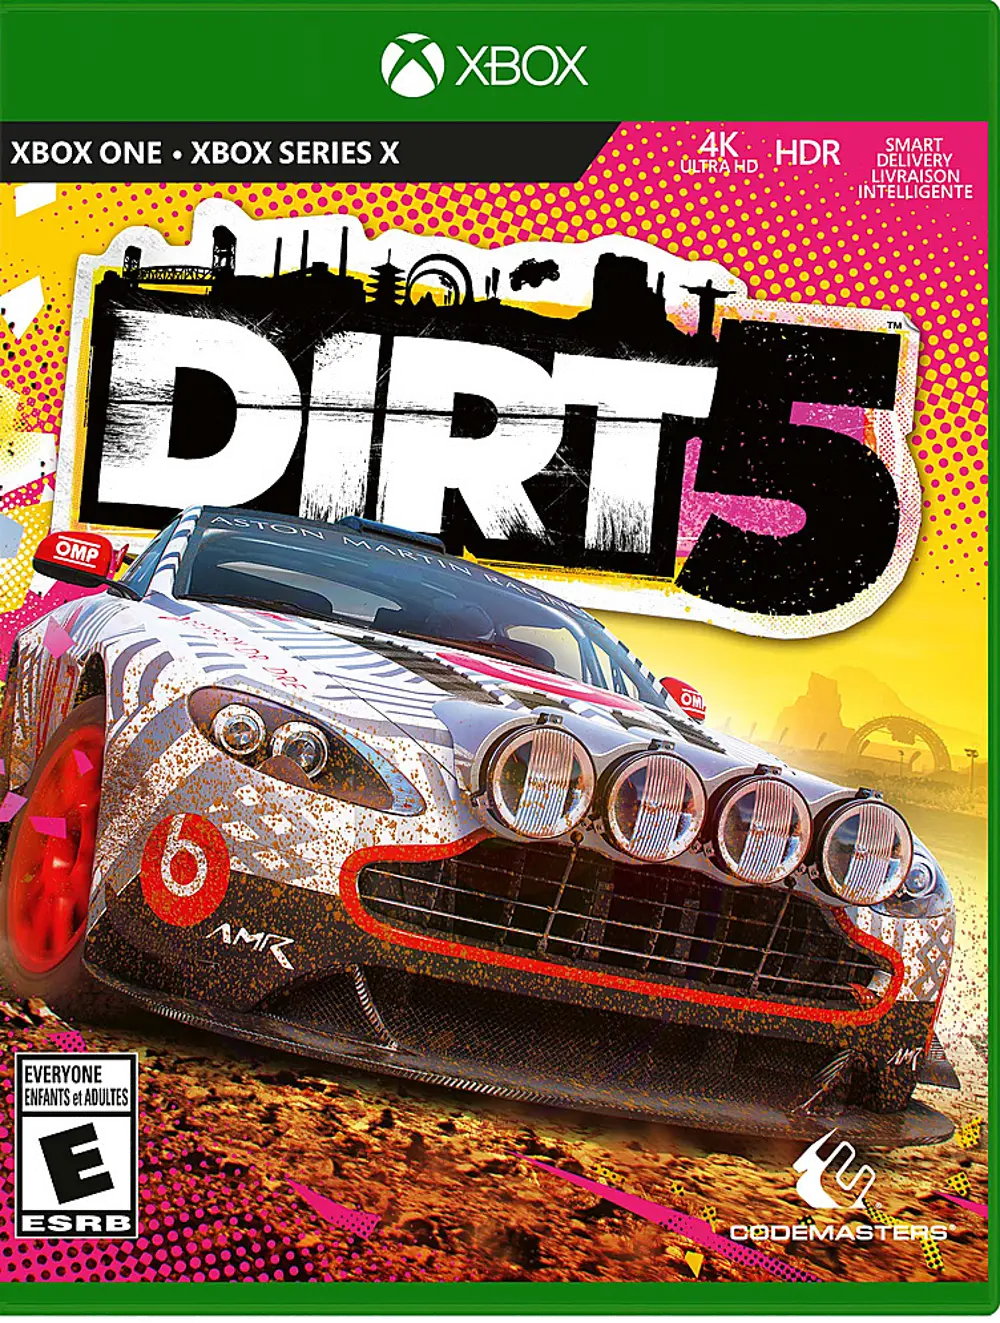 XB1 NGI 01800 Dirt 5 - Xbox One, Xbox Series X-1